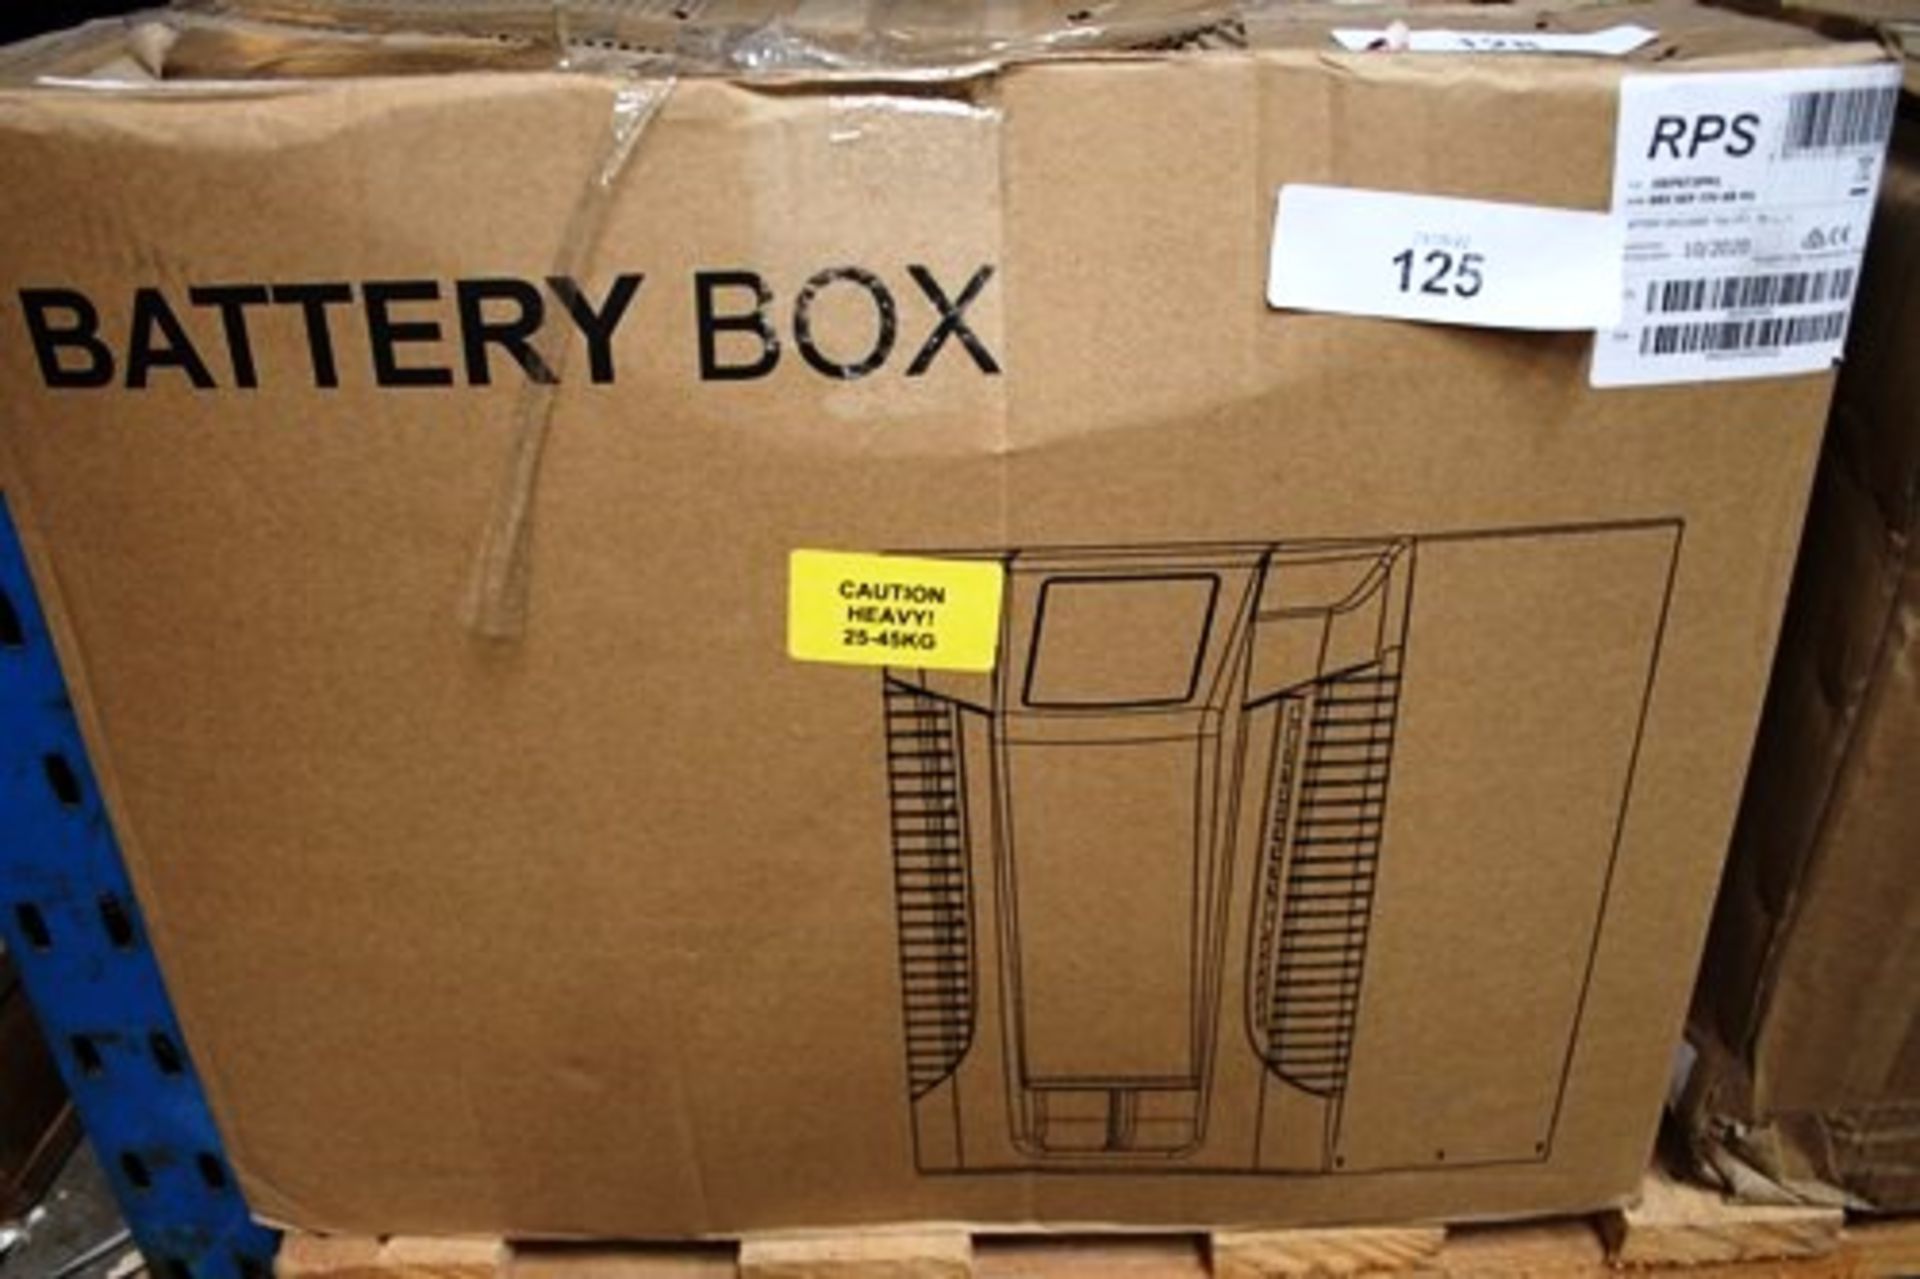 1 x Riello battery box, product no. JSEP072PM1, model Sentinel Pro - New in box (ES8)